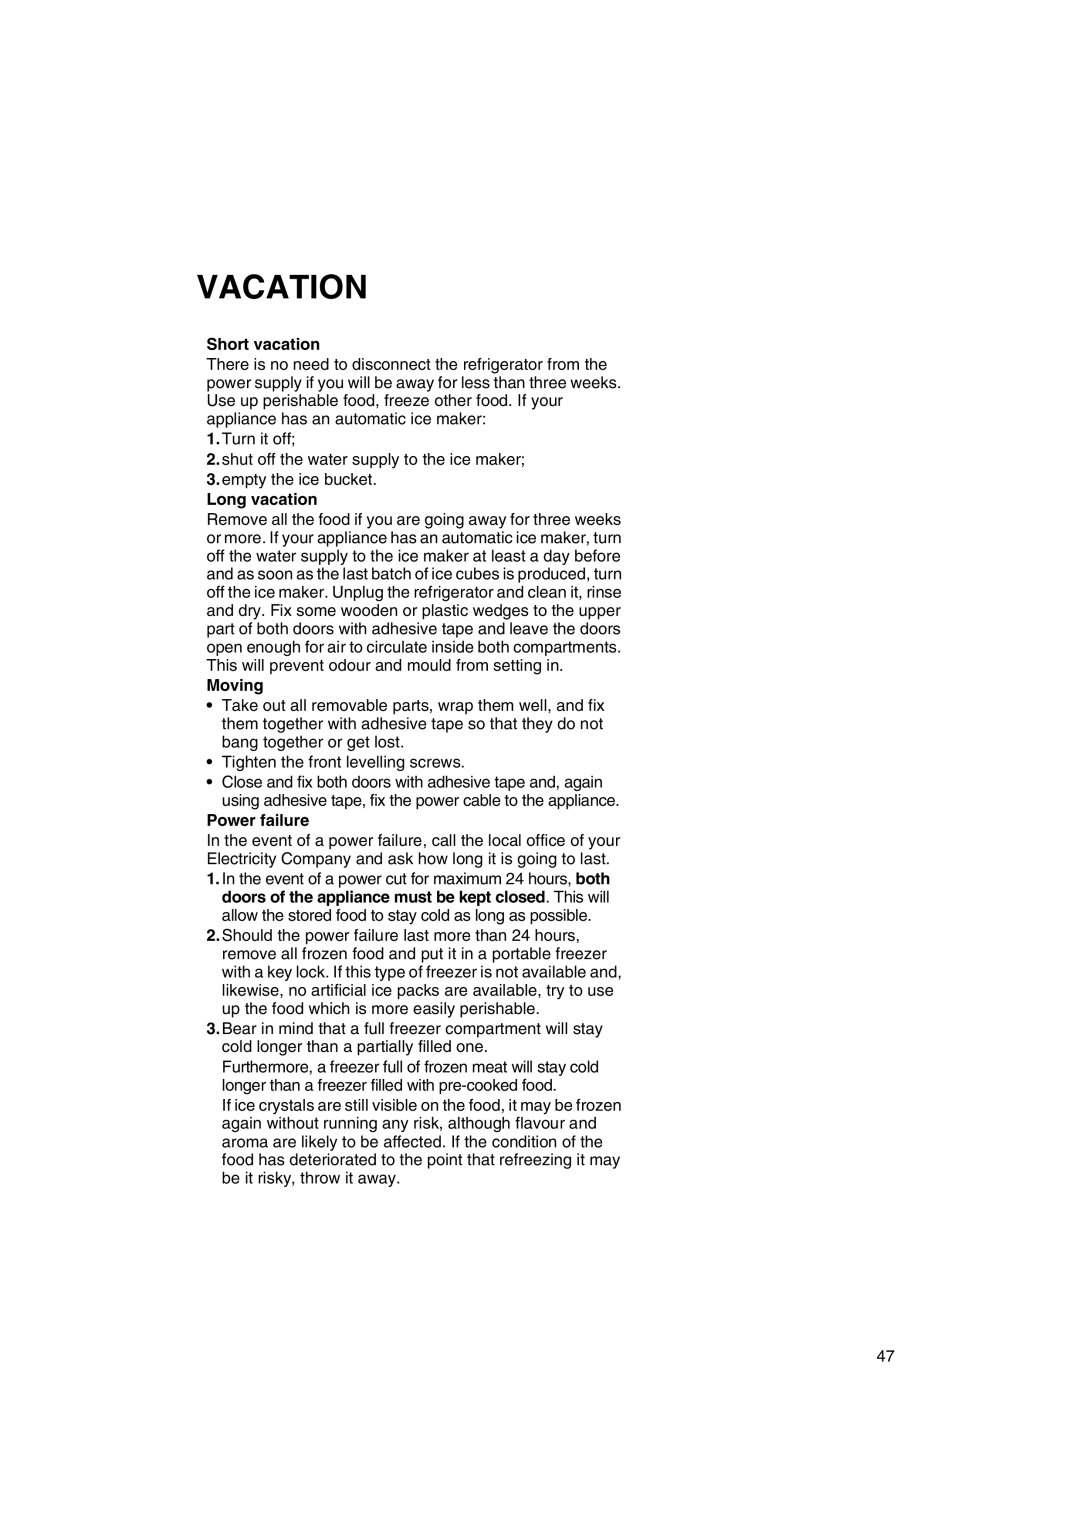 Smeg FA550XBI manual Vacation, Short vacation, Long vacation, Moving, Power failure 